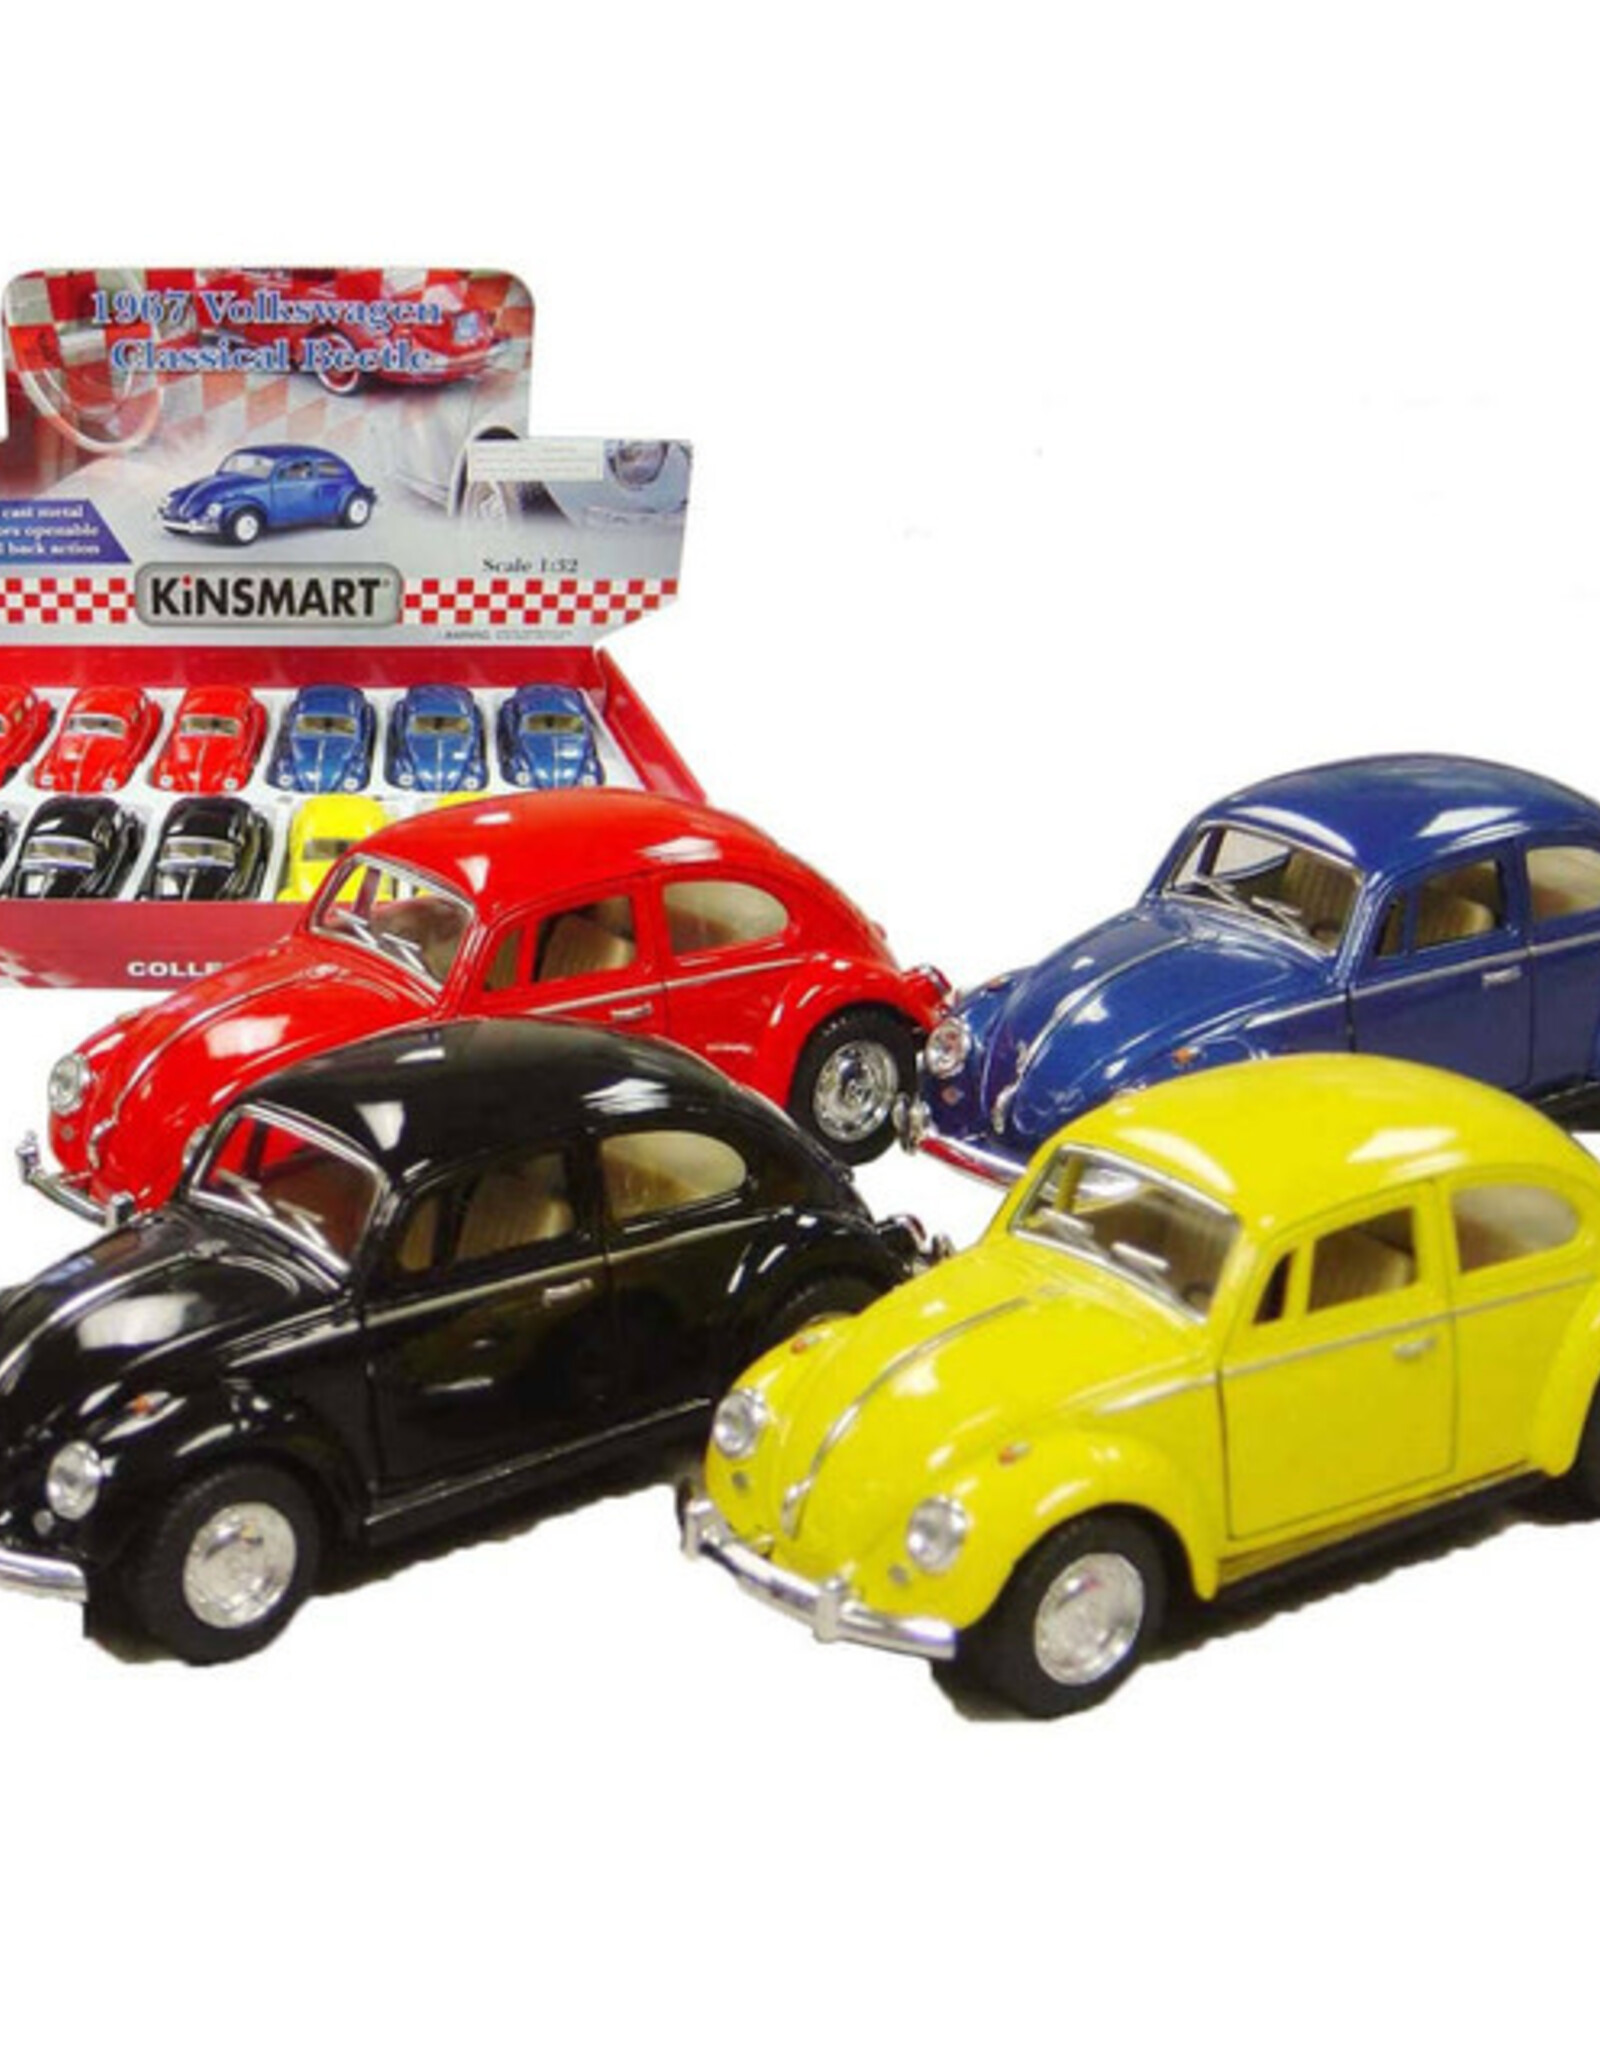 Kinsmart 5" VW Classic Beetle